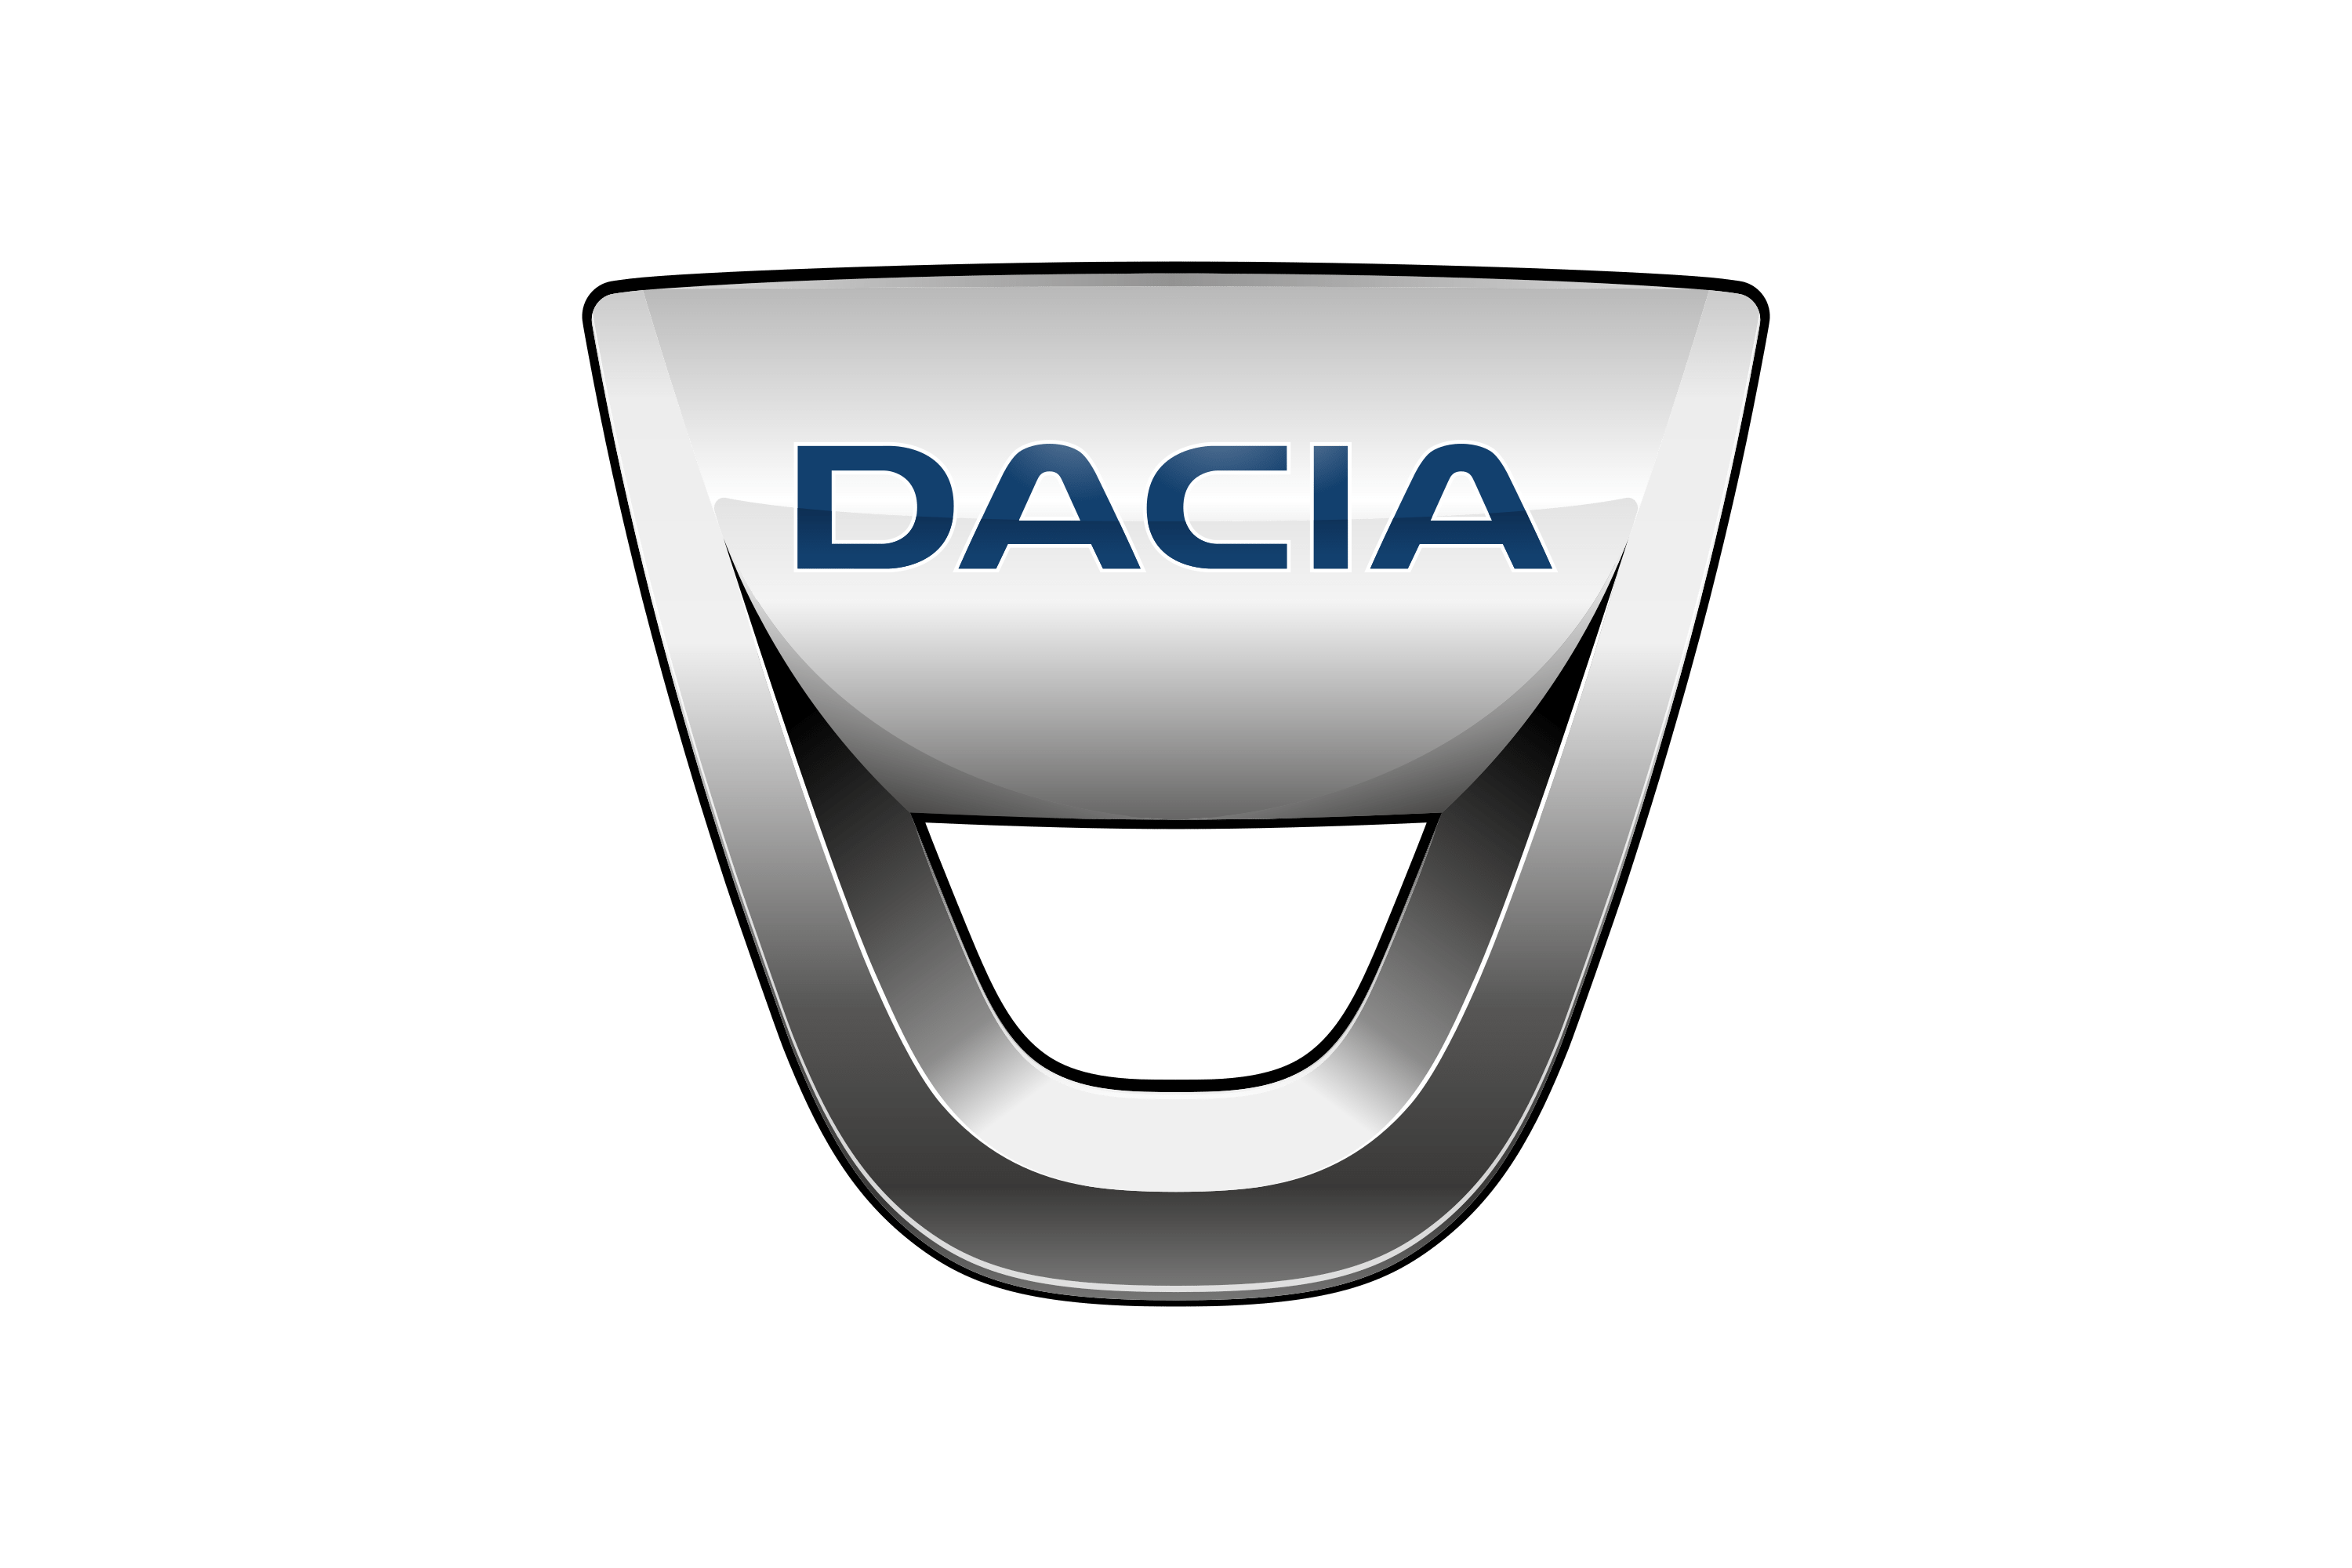 Download Dacia Logo in SVG Vector or PNG File Format - Logo.wine